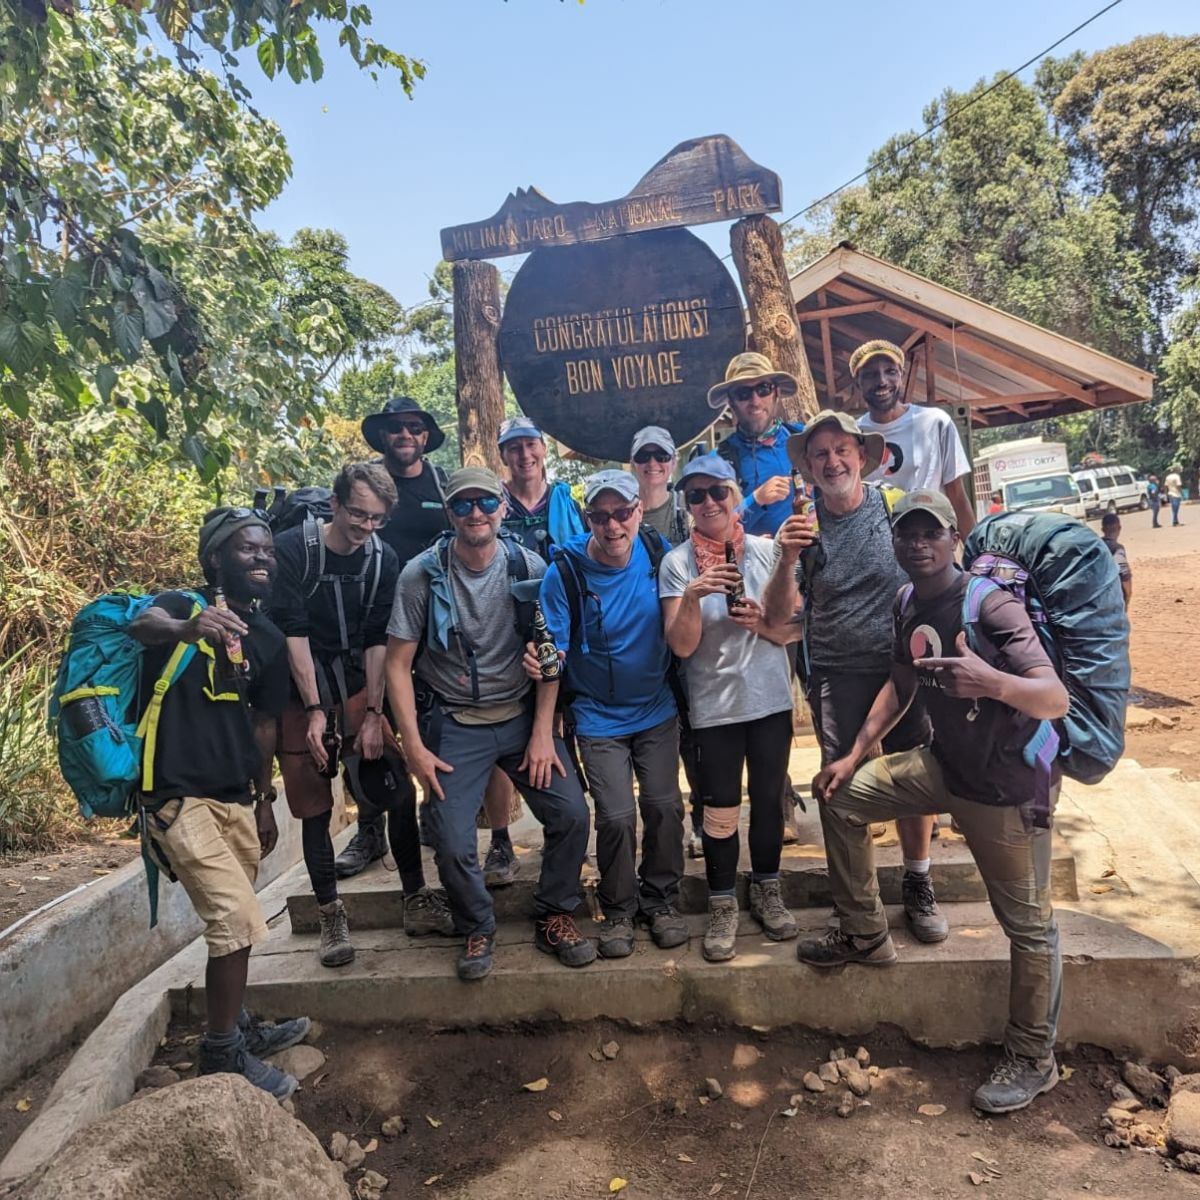 Kilimanjaro group pic bon voyage sign